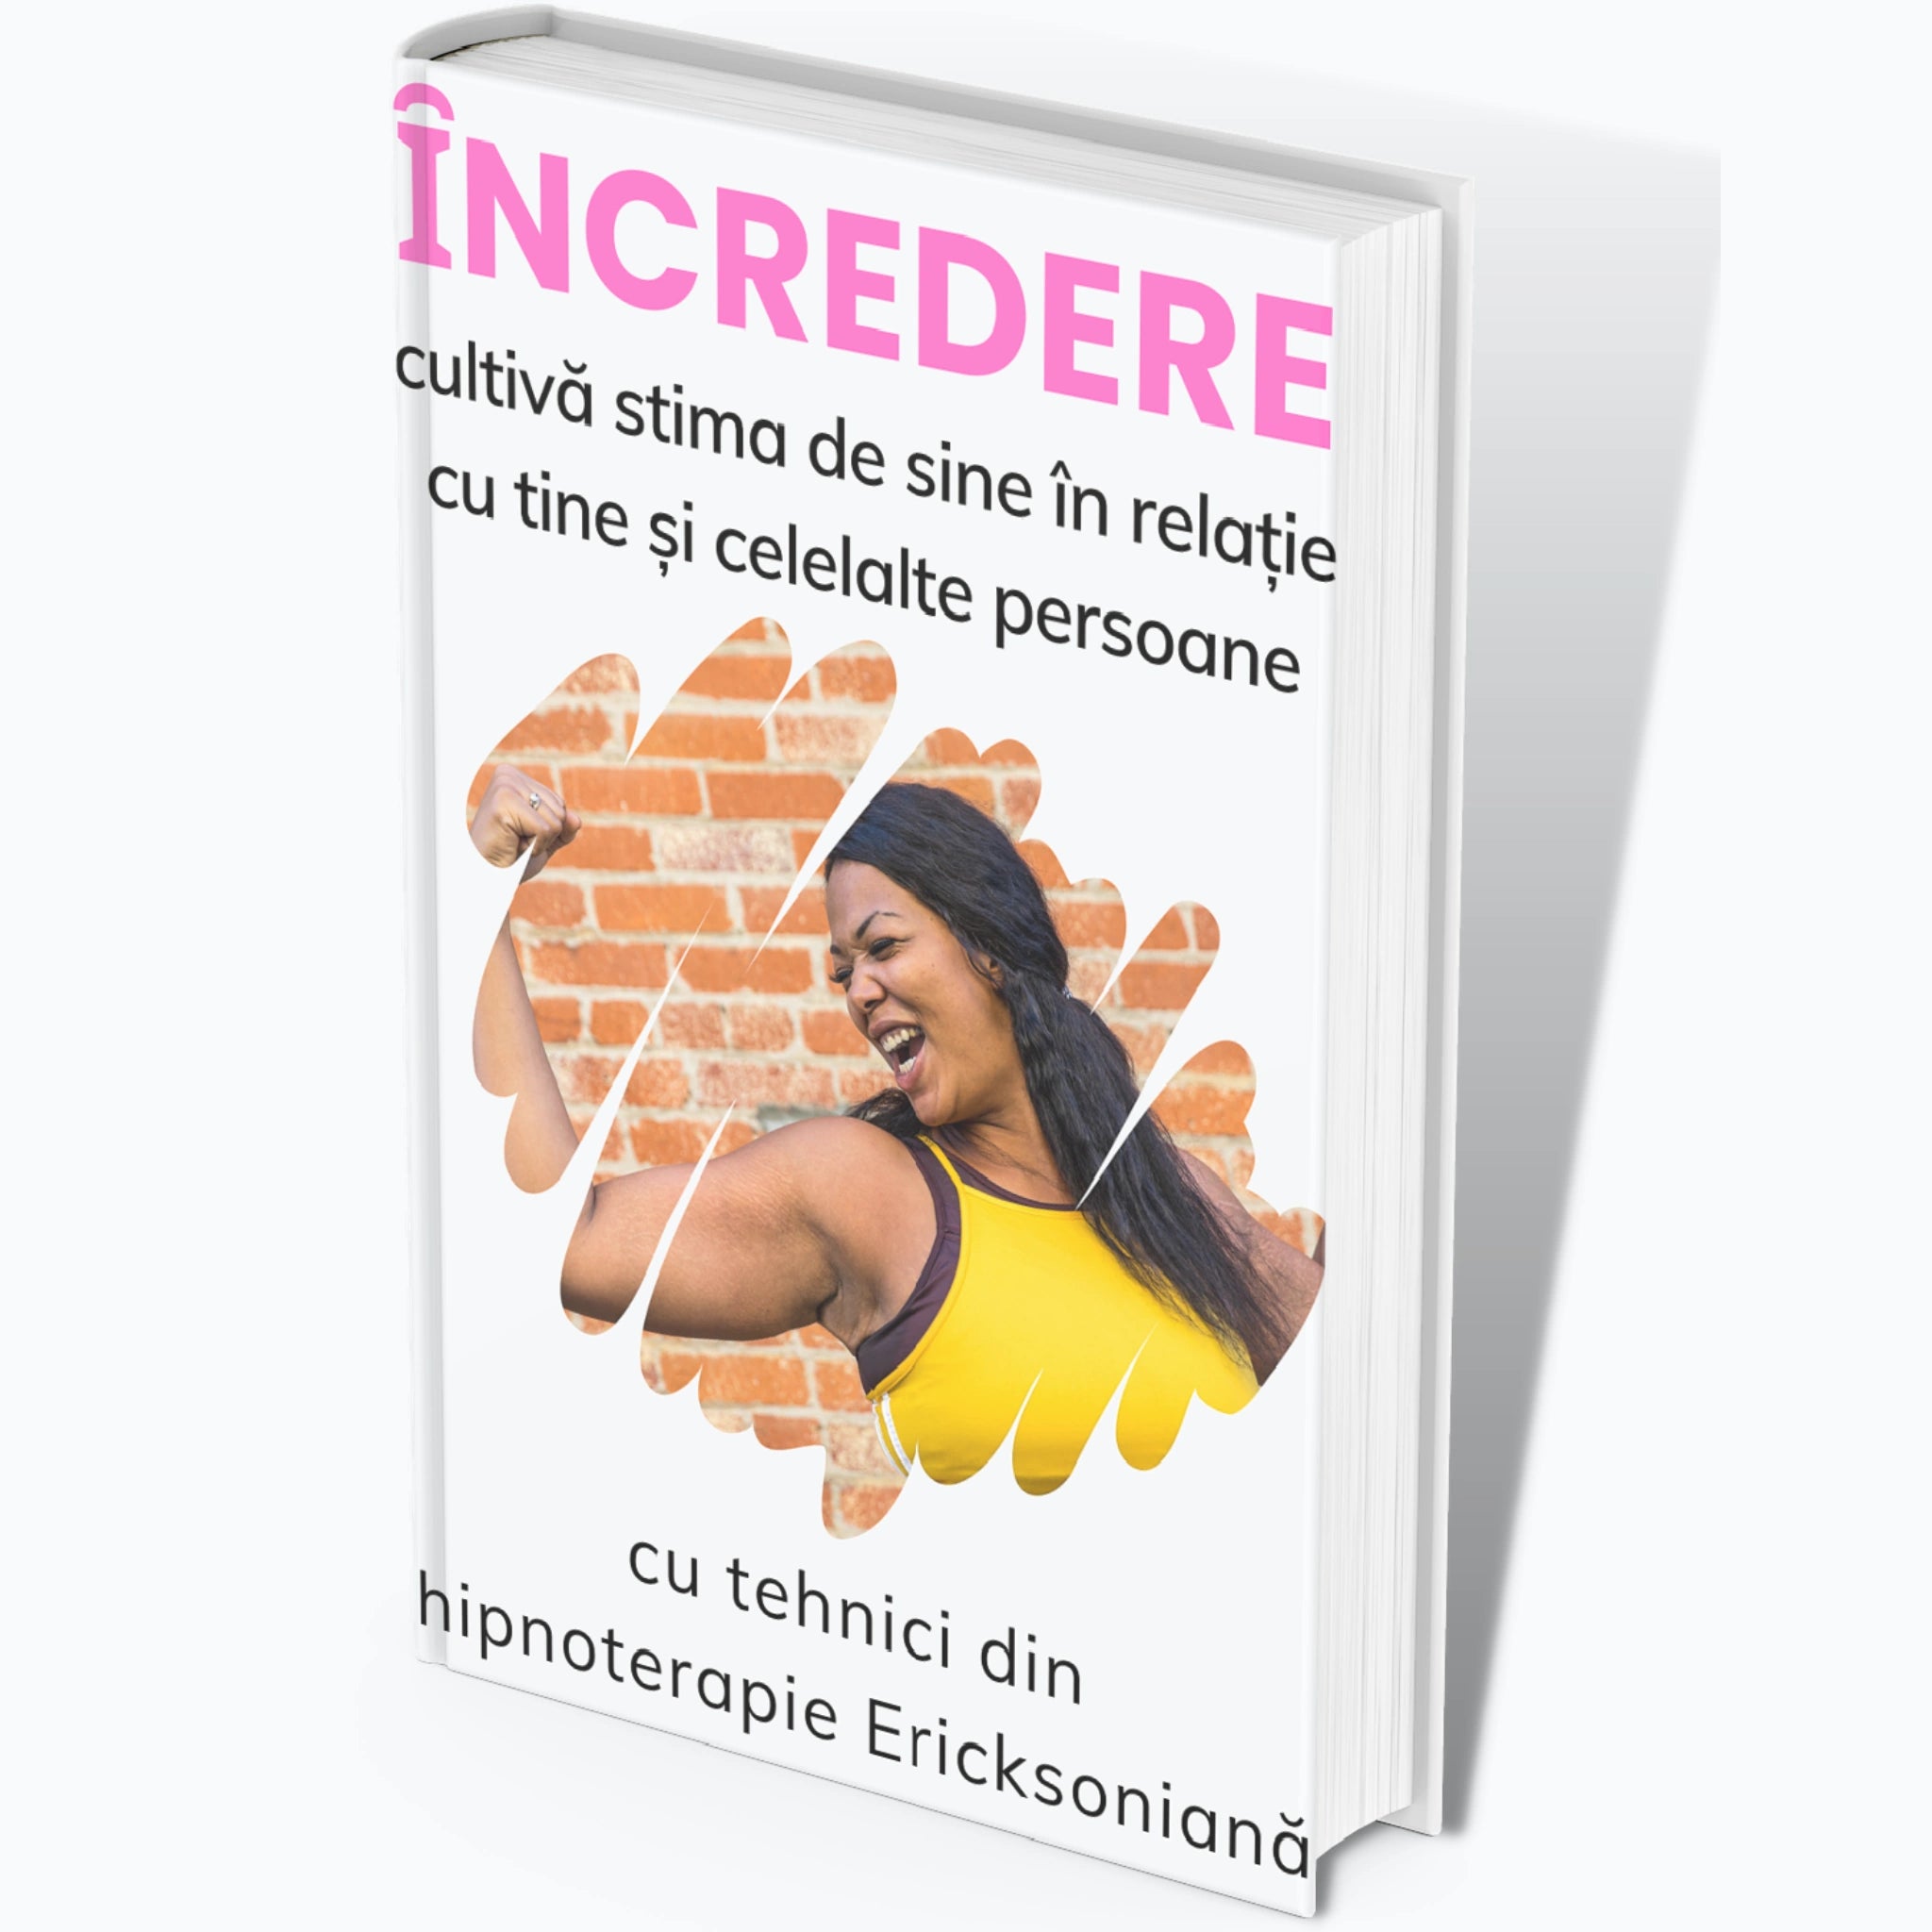 Coperta audiobook "Incredere: cultiva stima de sine in relatie cu tine si celelalte persoane"